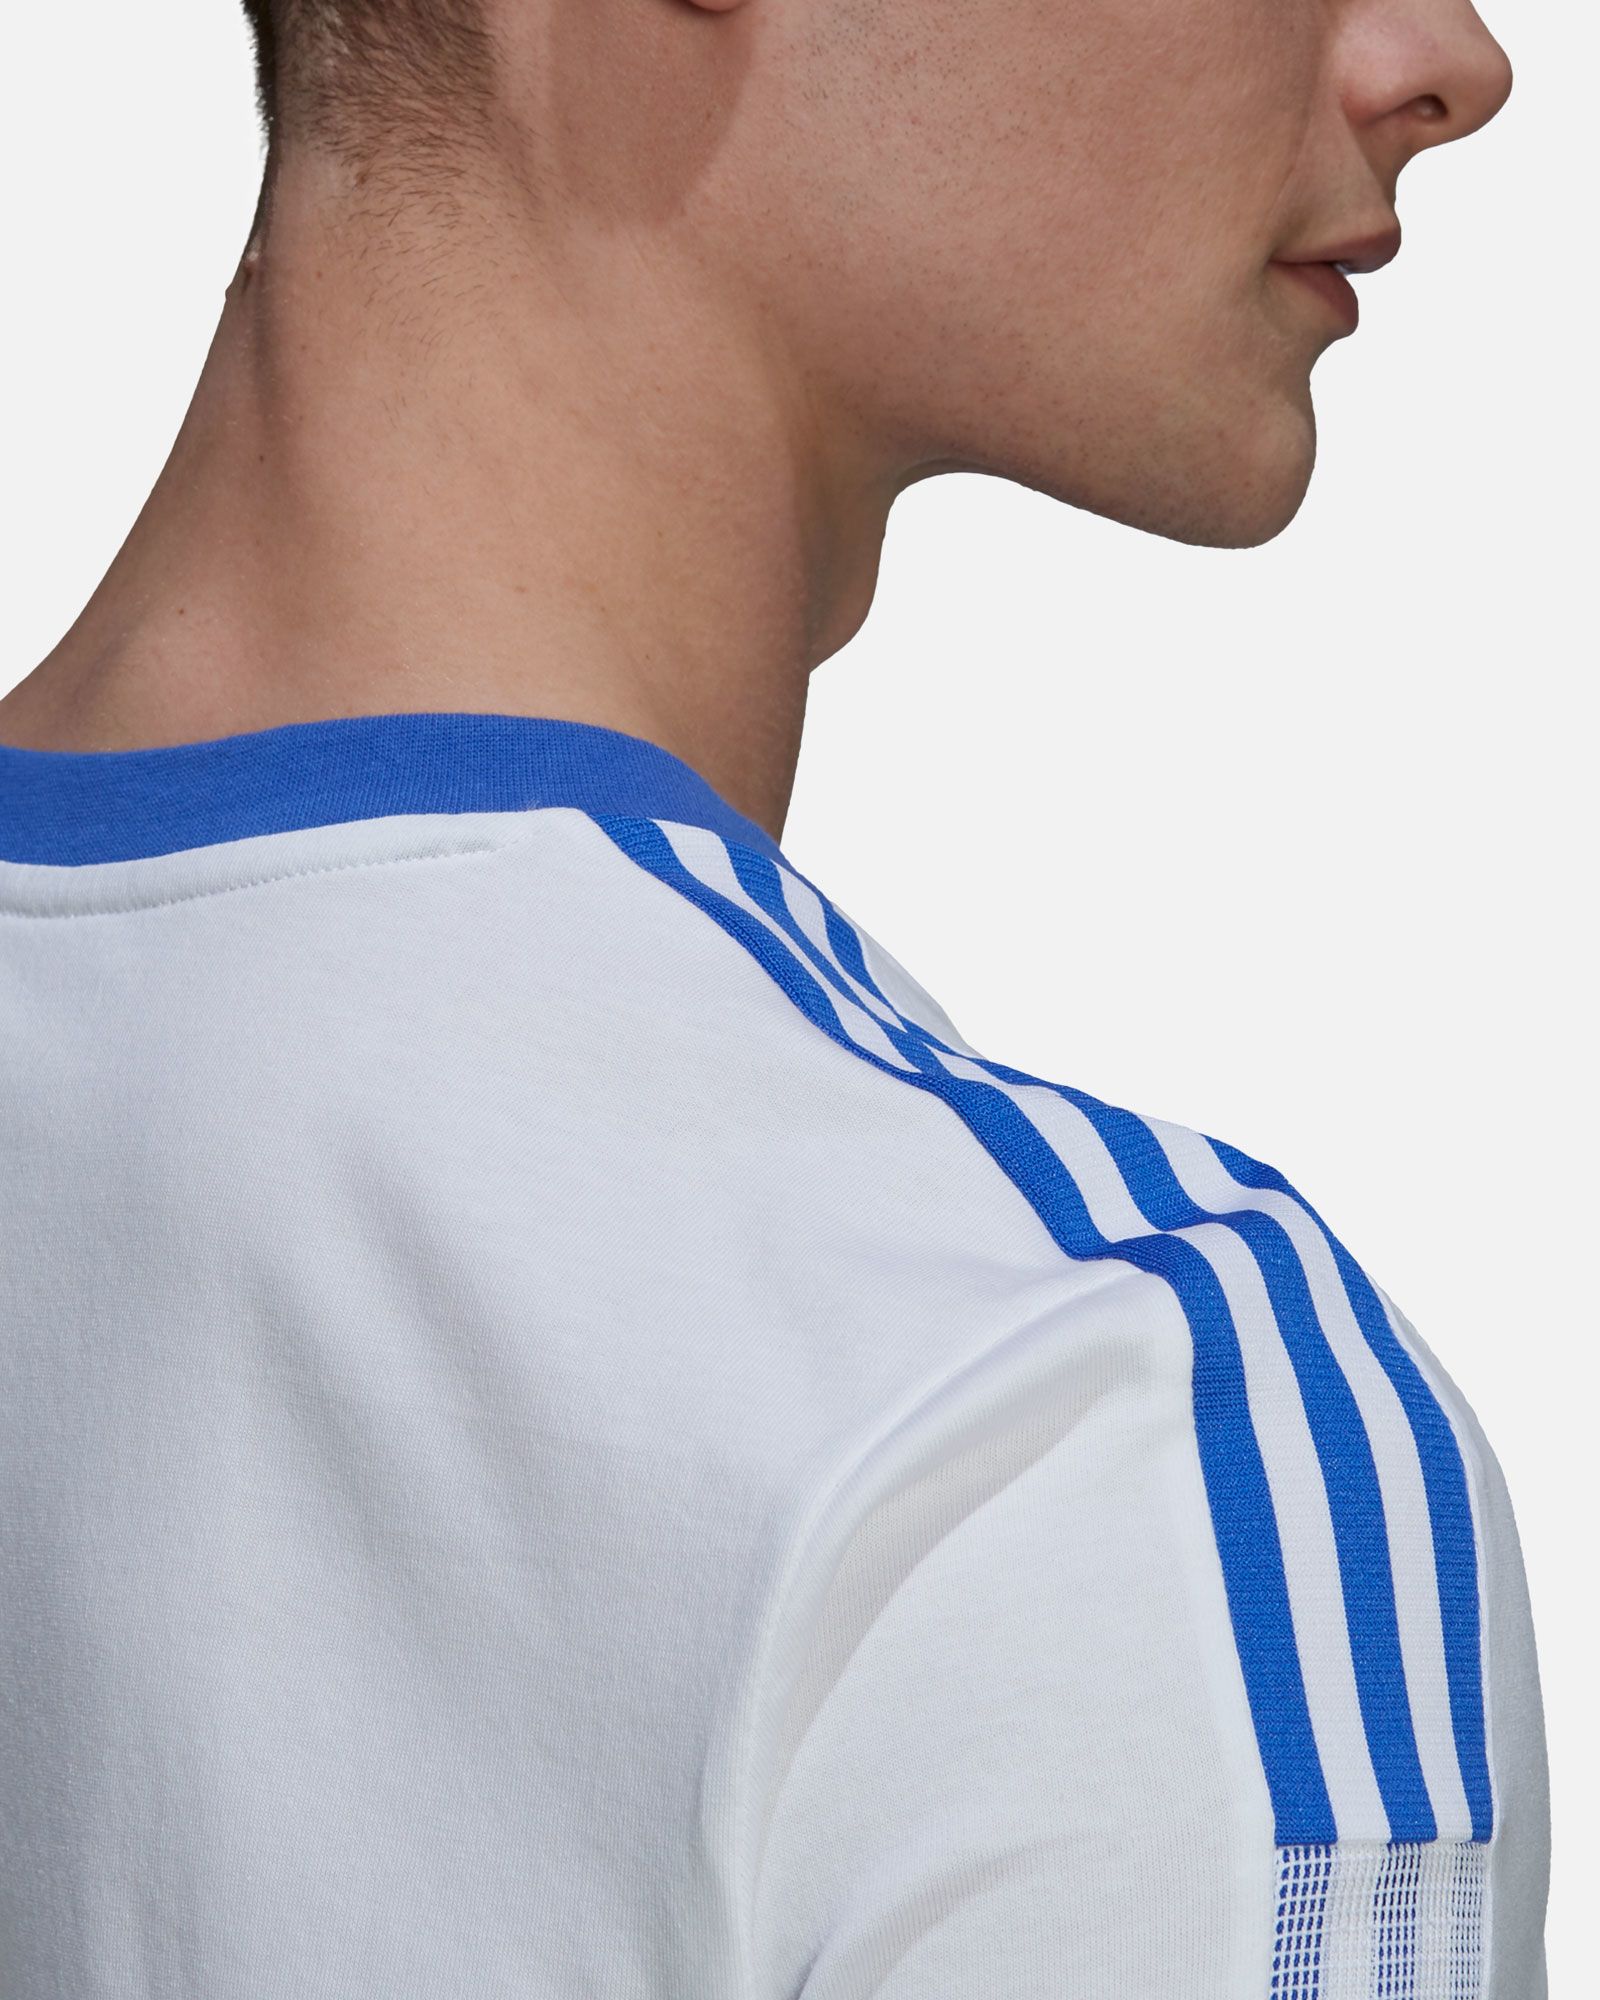 Camiseta Real Madrid 2021/2022 TR - Fútbol Factory